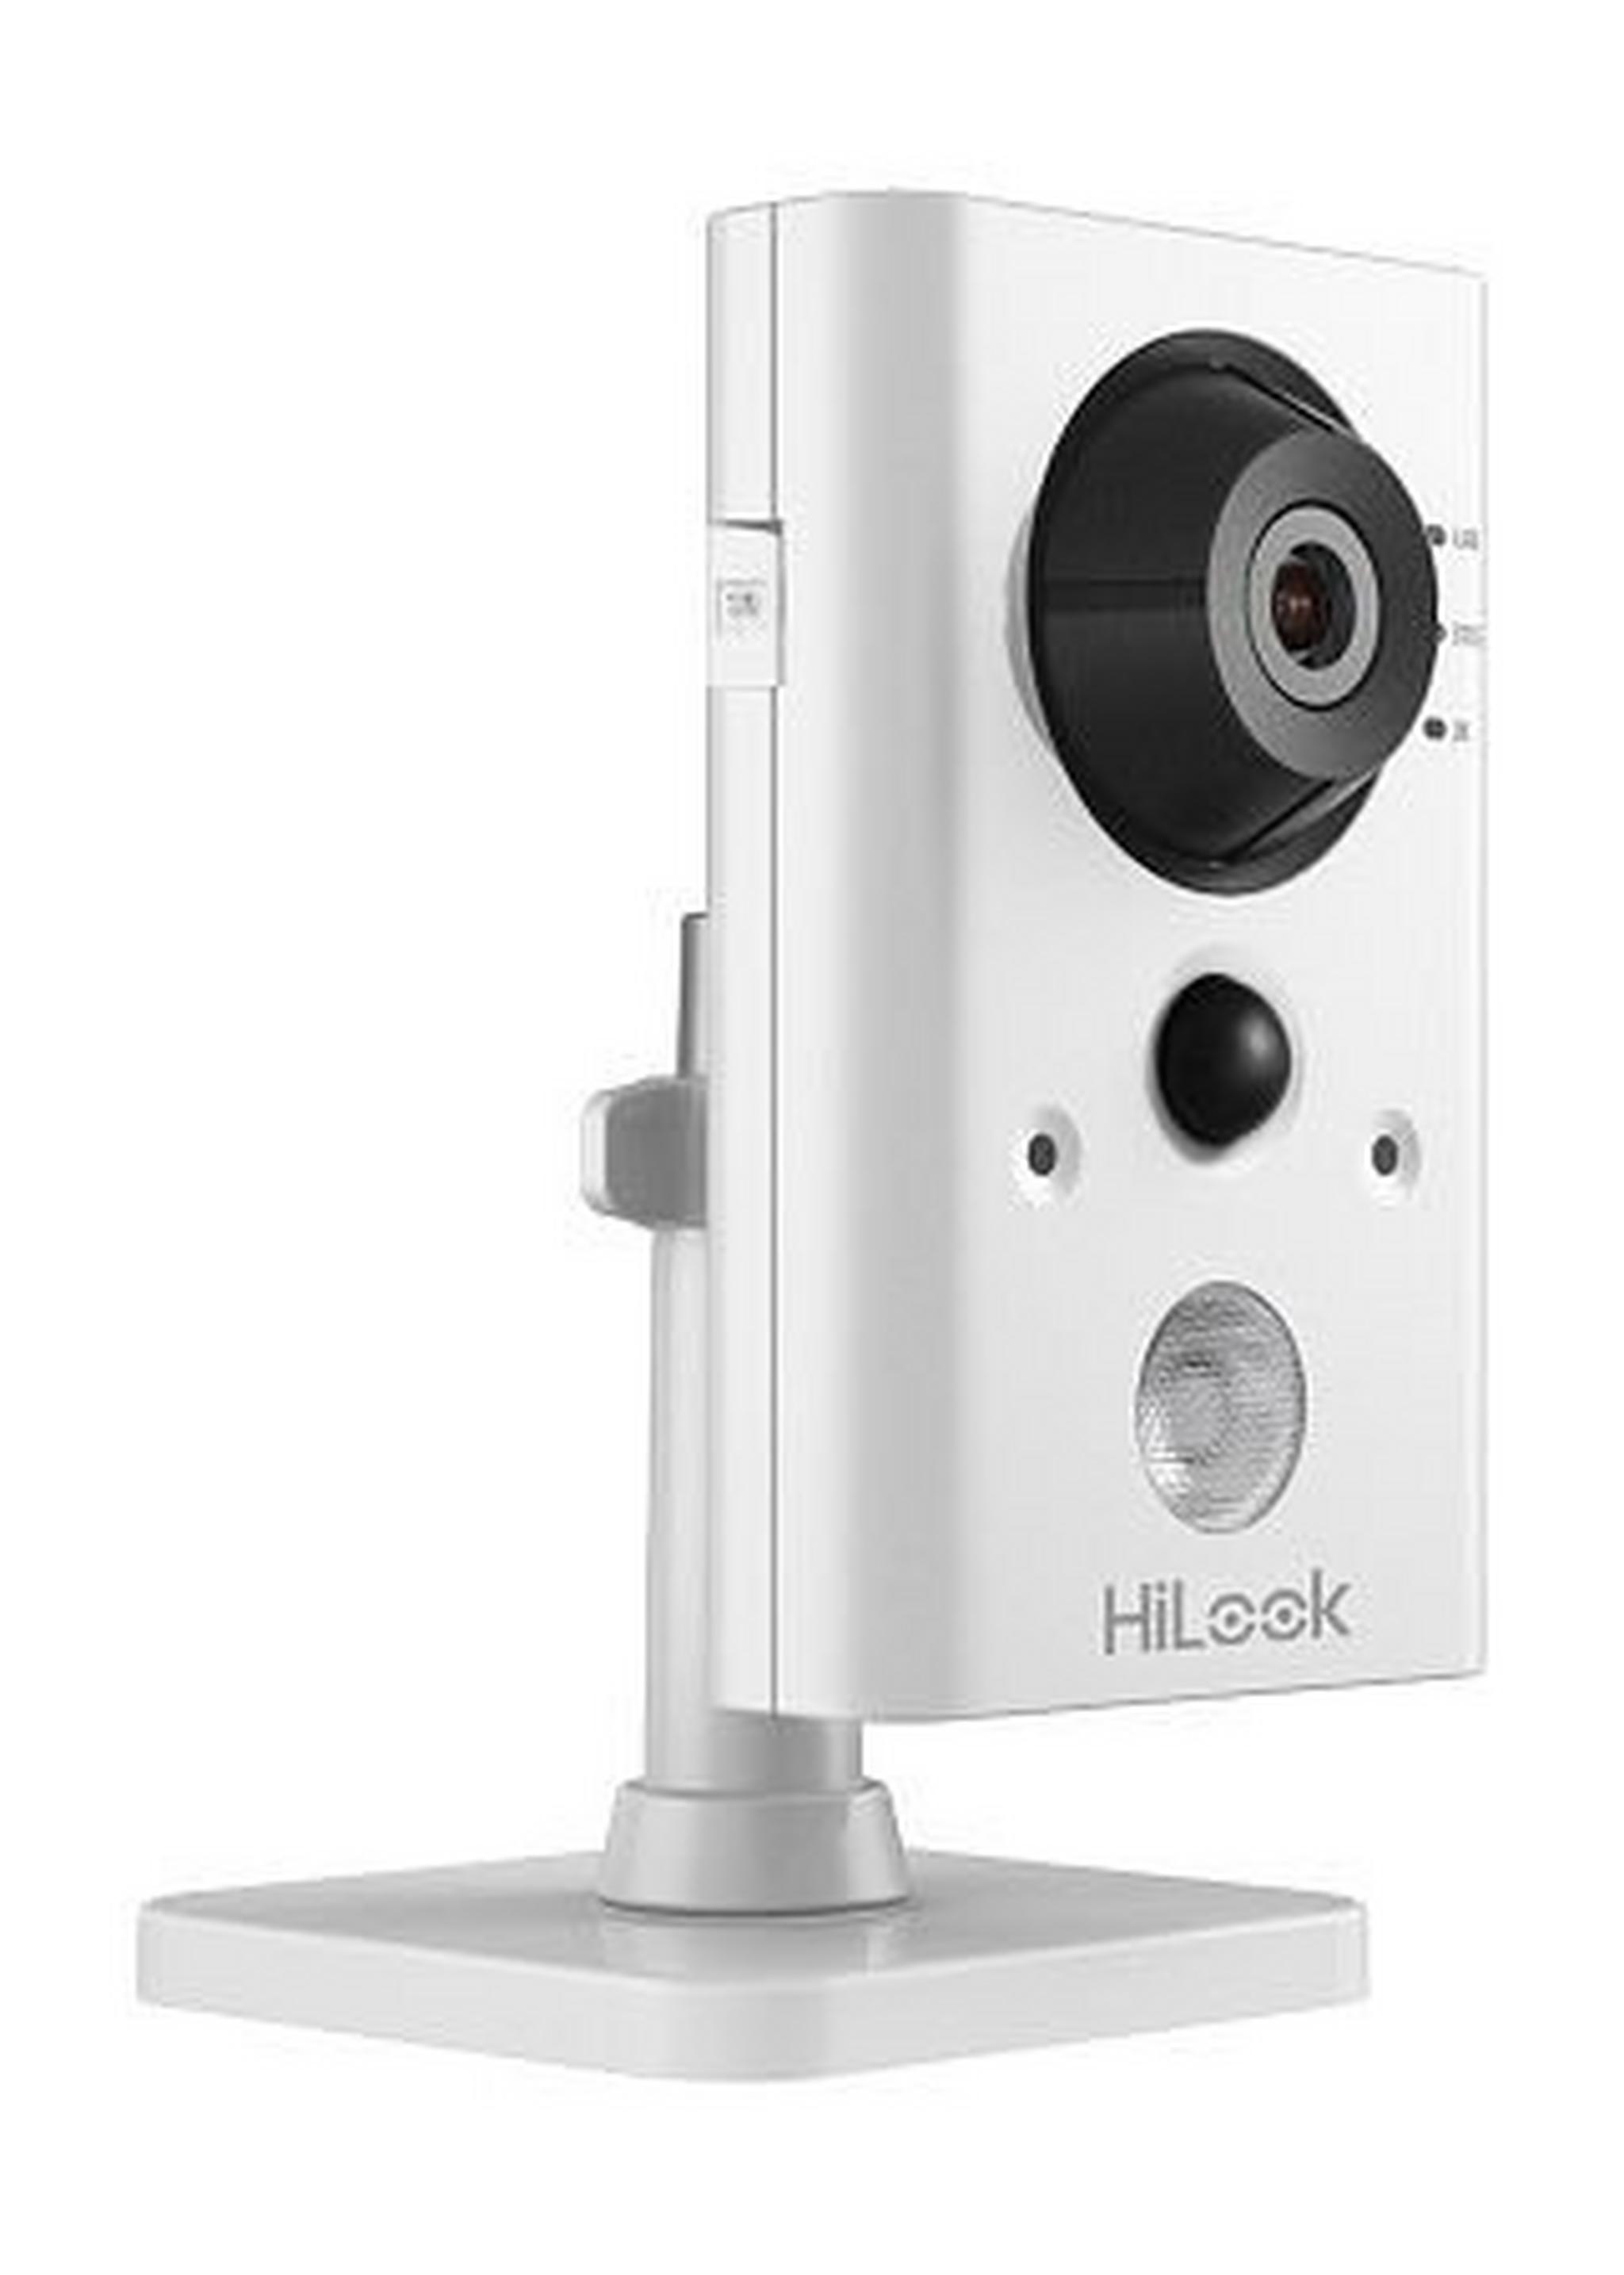 HiLook 2.0MP Network Cube Security Camera - IPC-C220